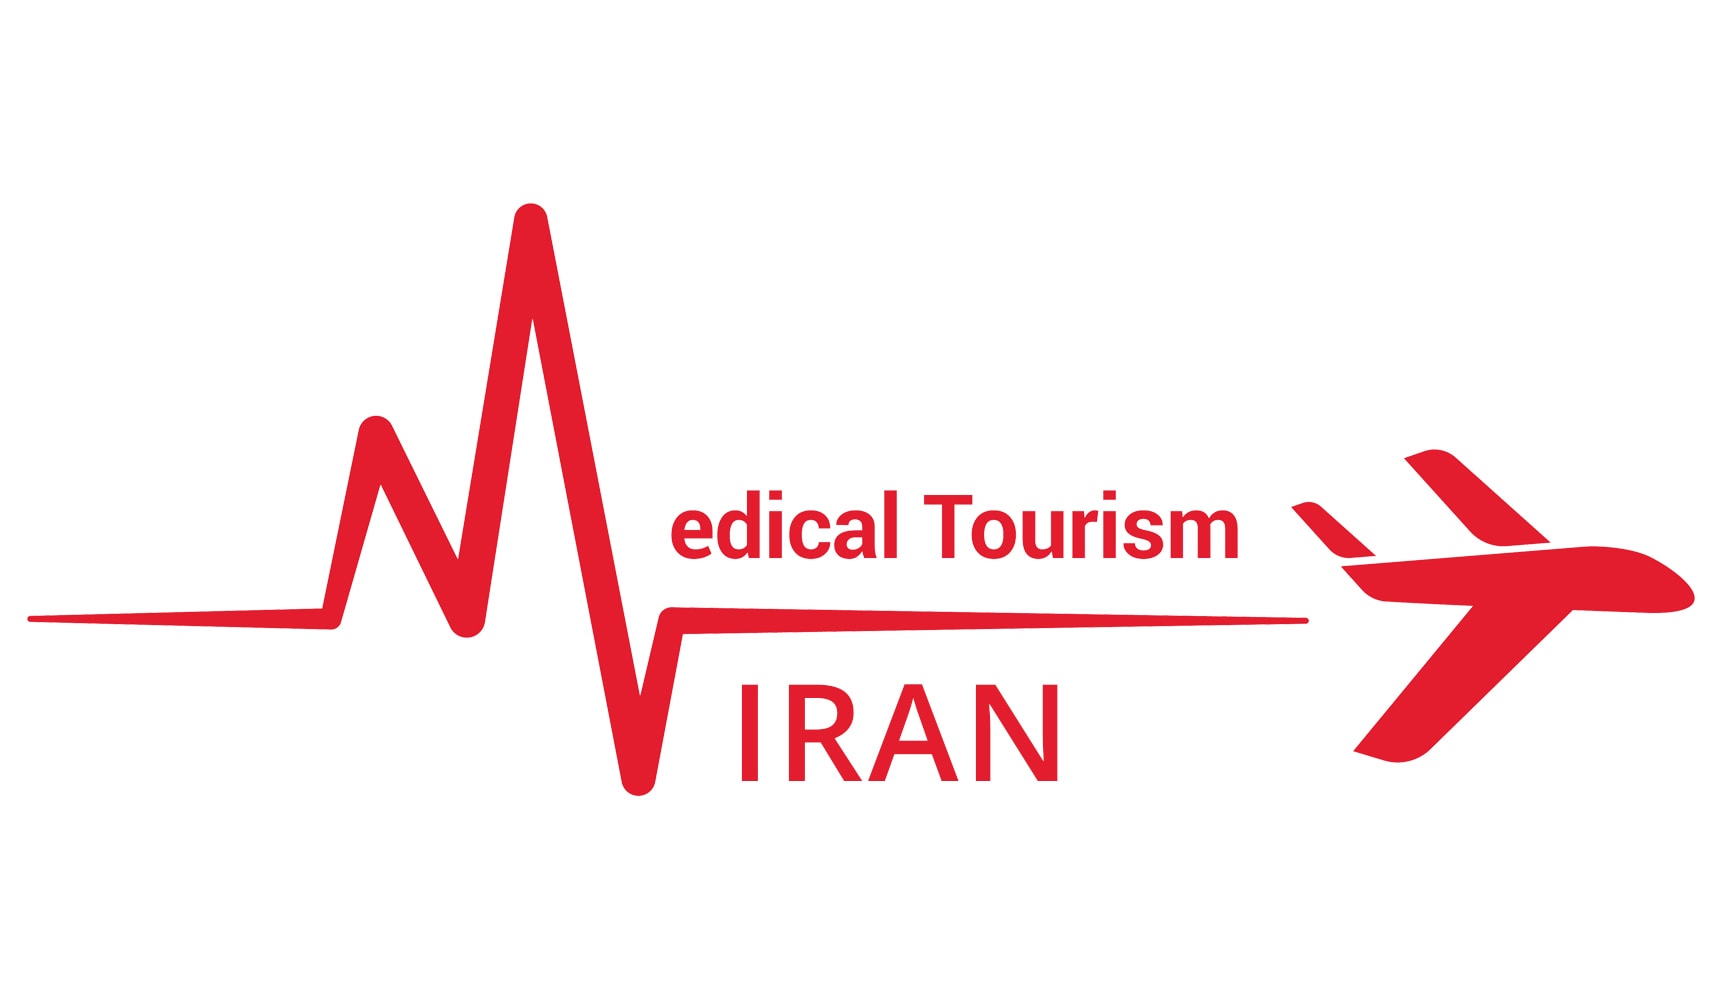 Iran medical tourism